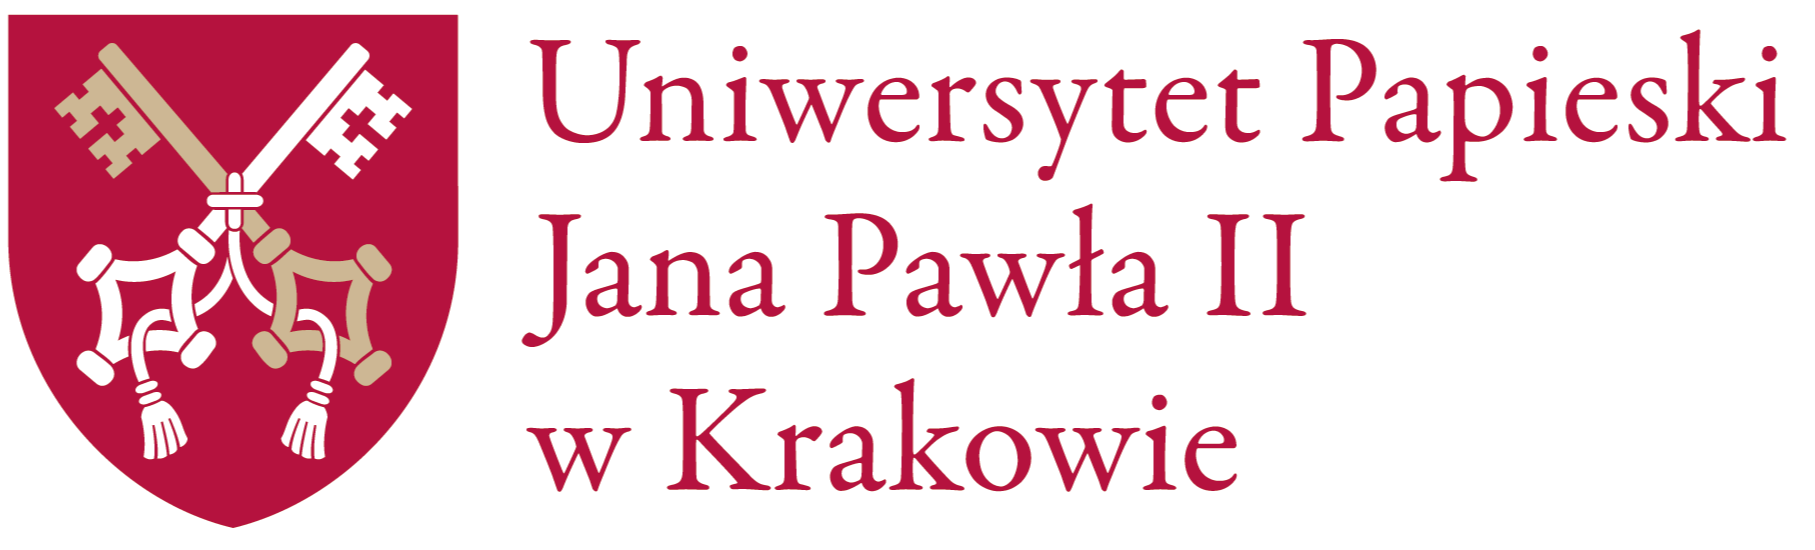 UP JP2 W Krakowie